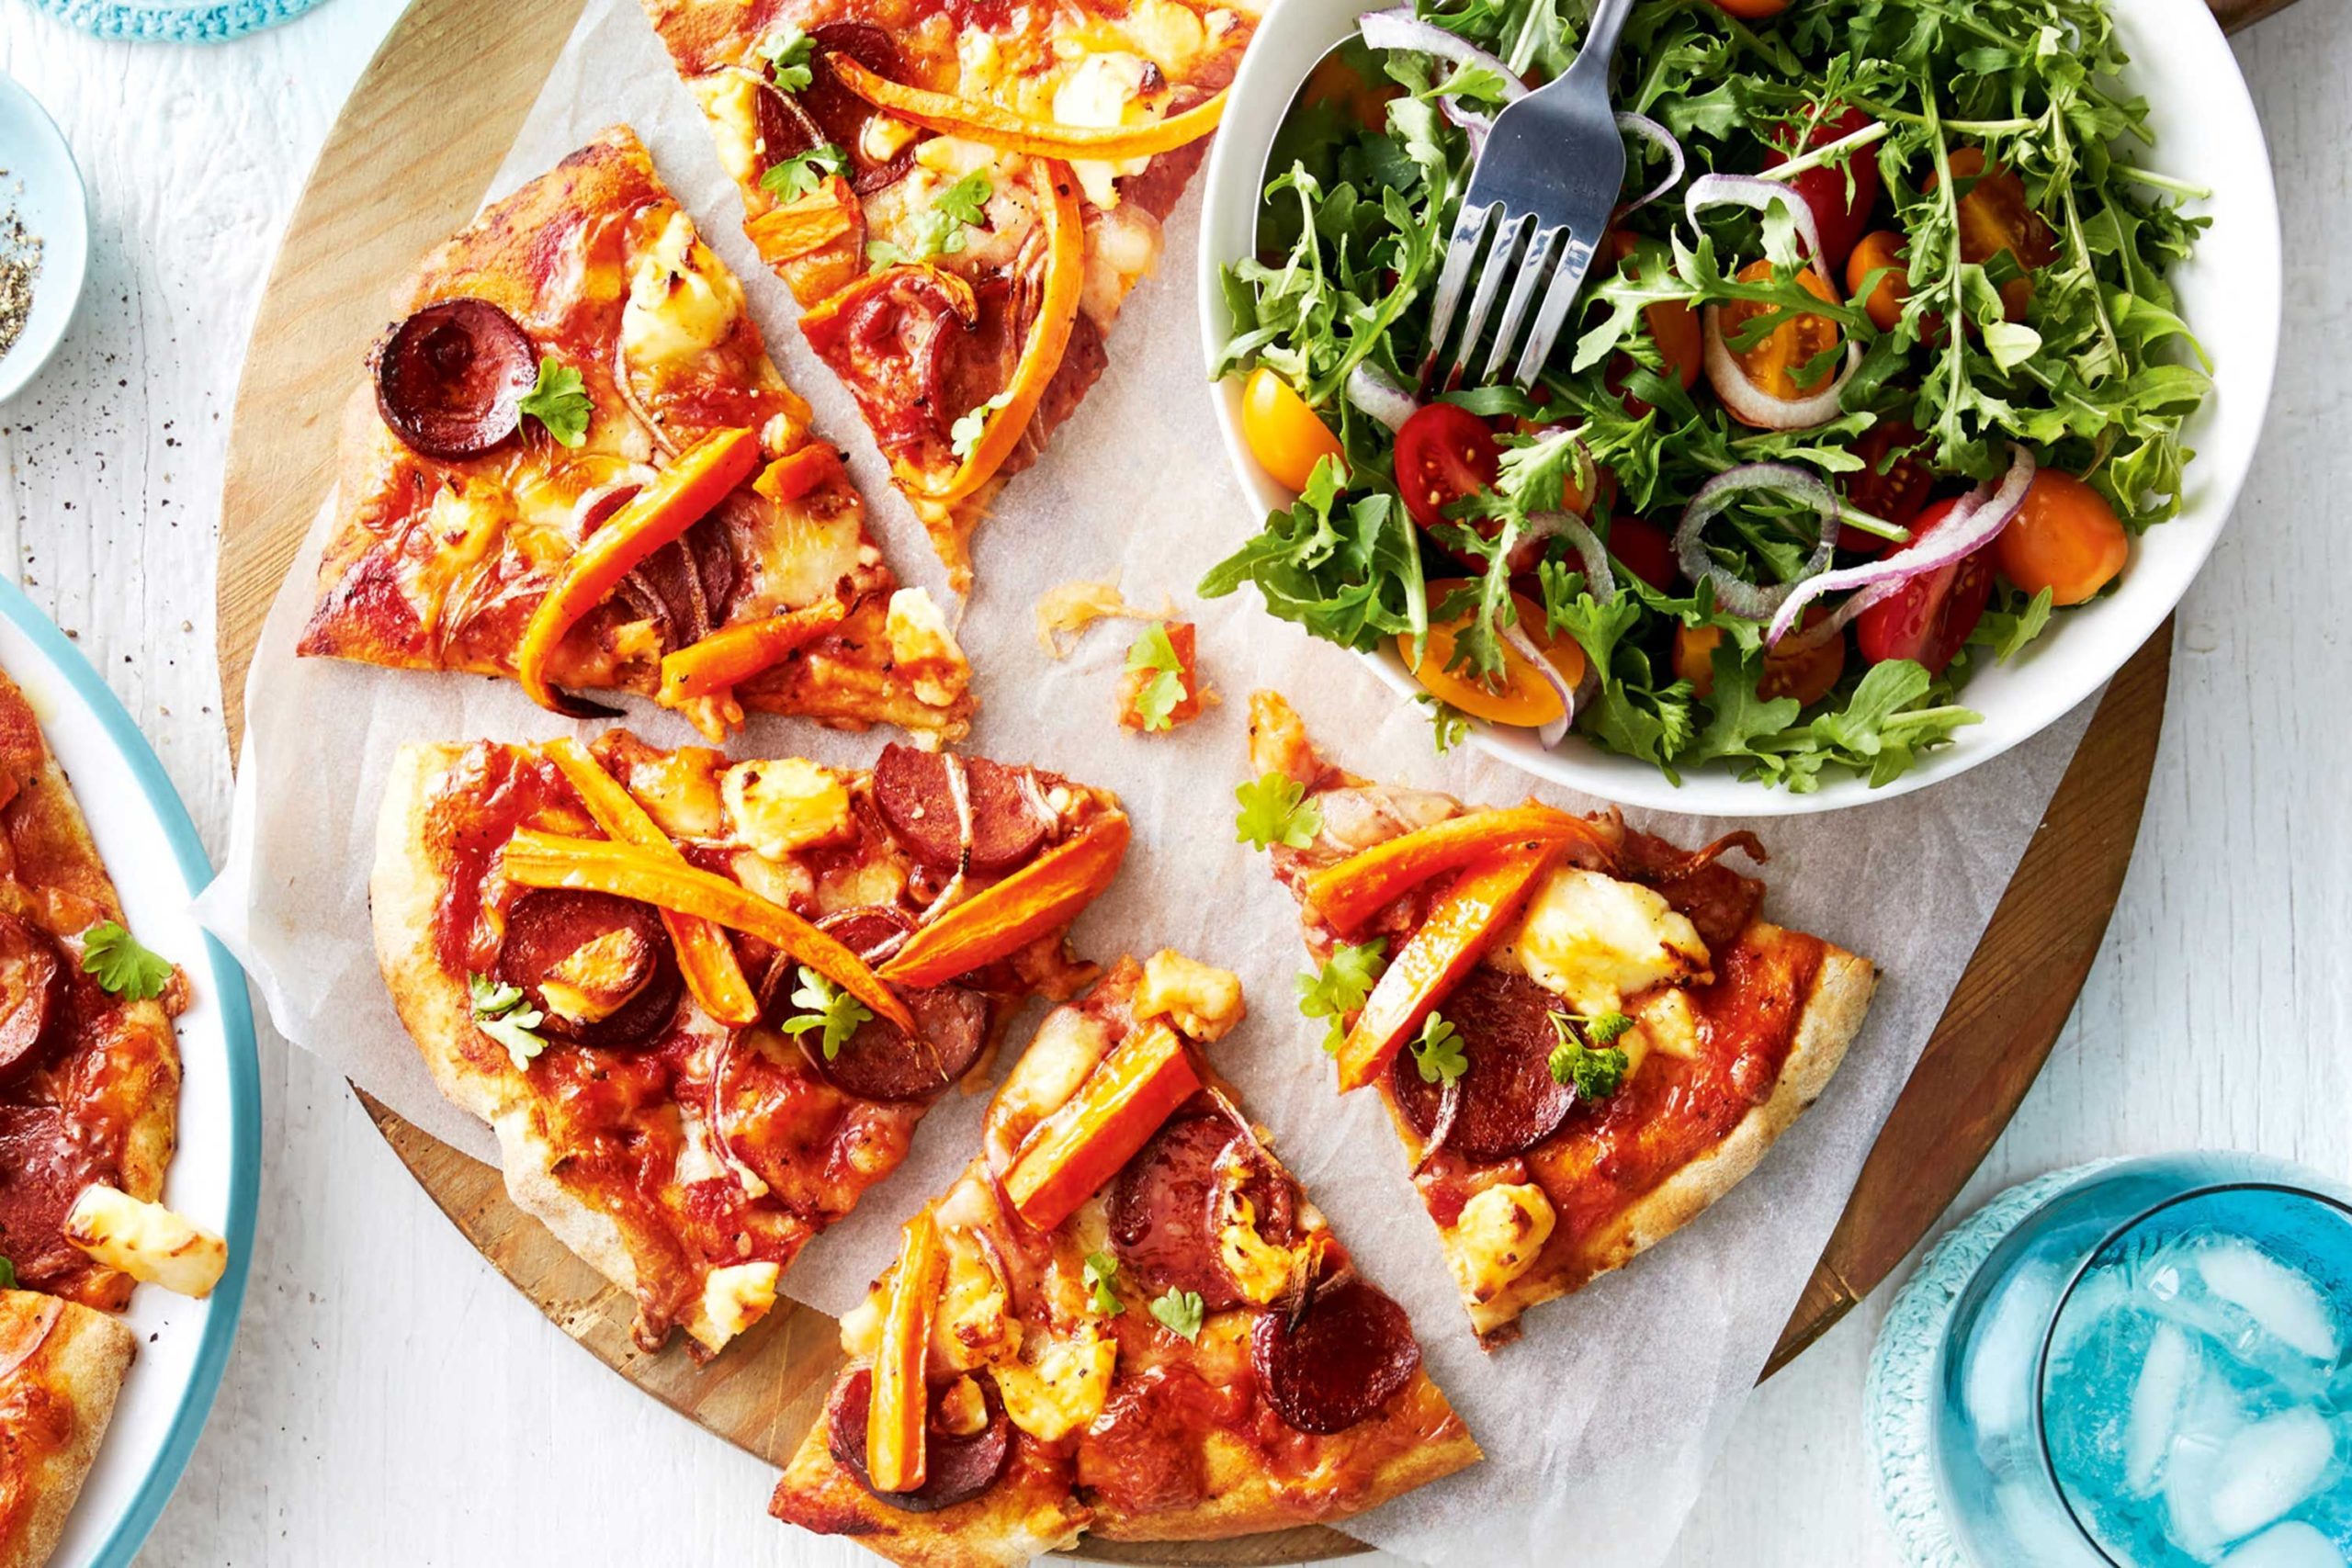 chorizo-and-carrot-pizza-with-rocket-salad-109367-1